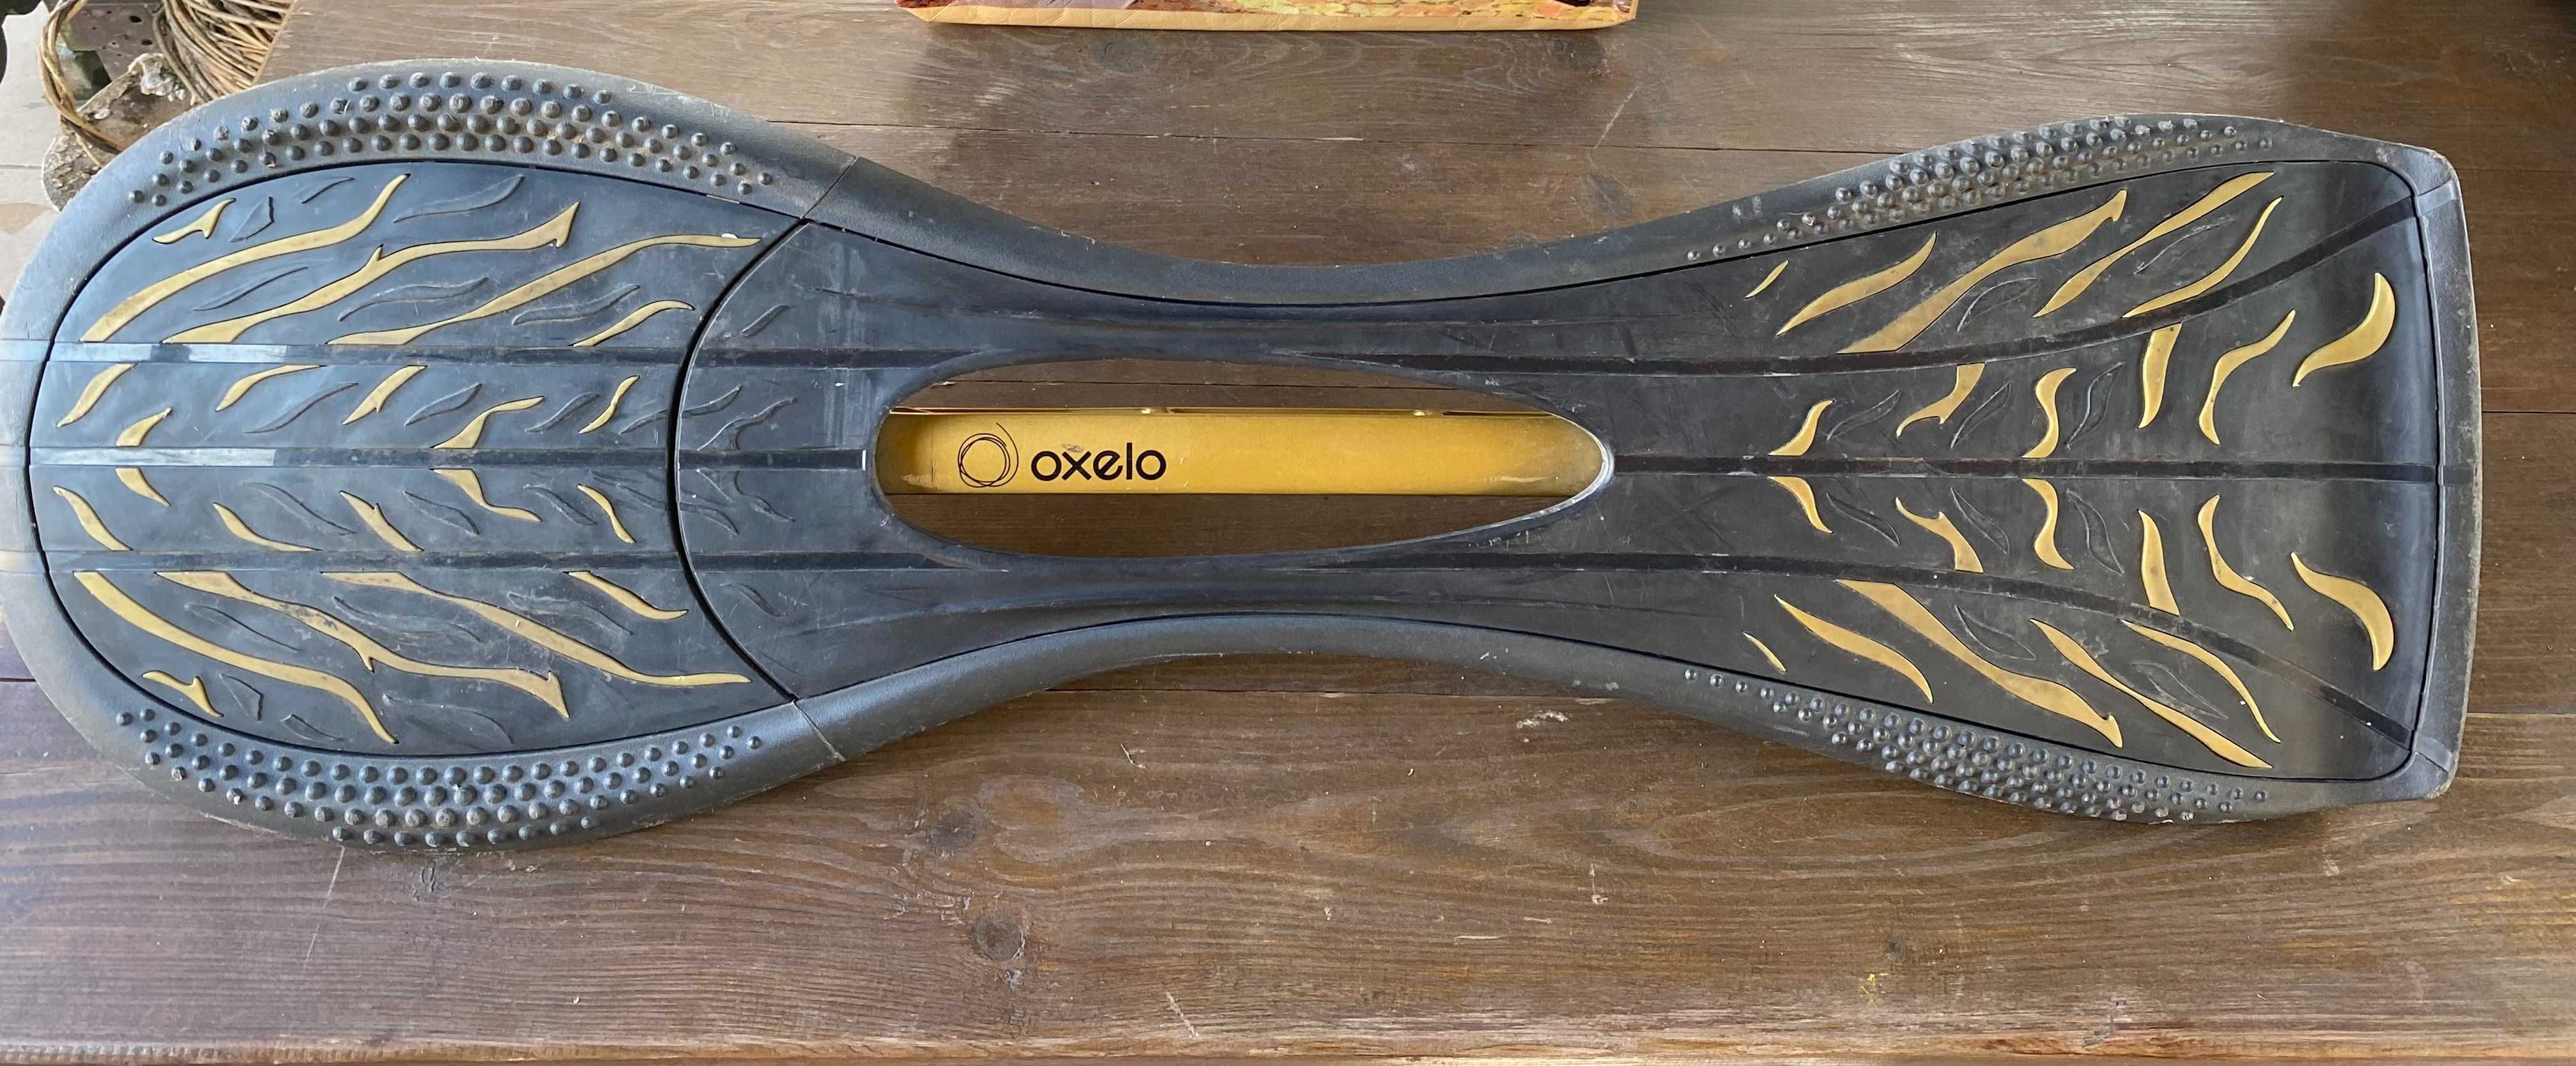 Deskorolka waveboard oxeloboard - Oxelo